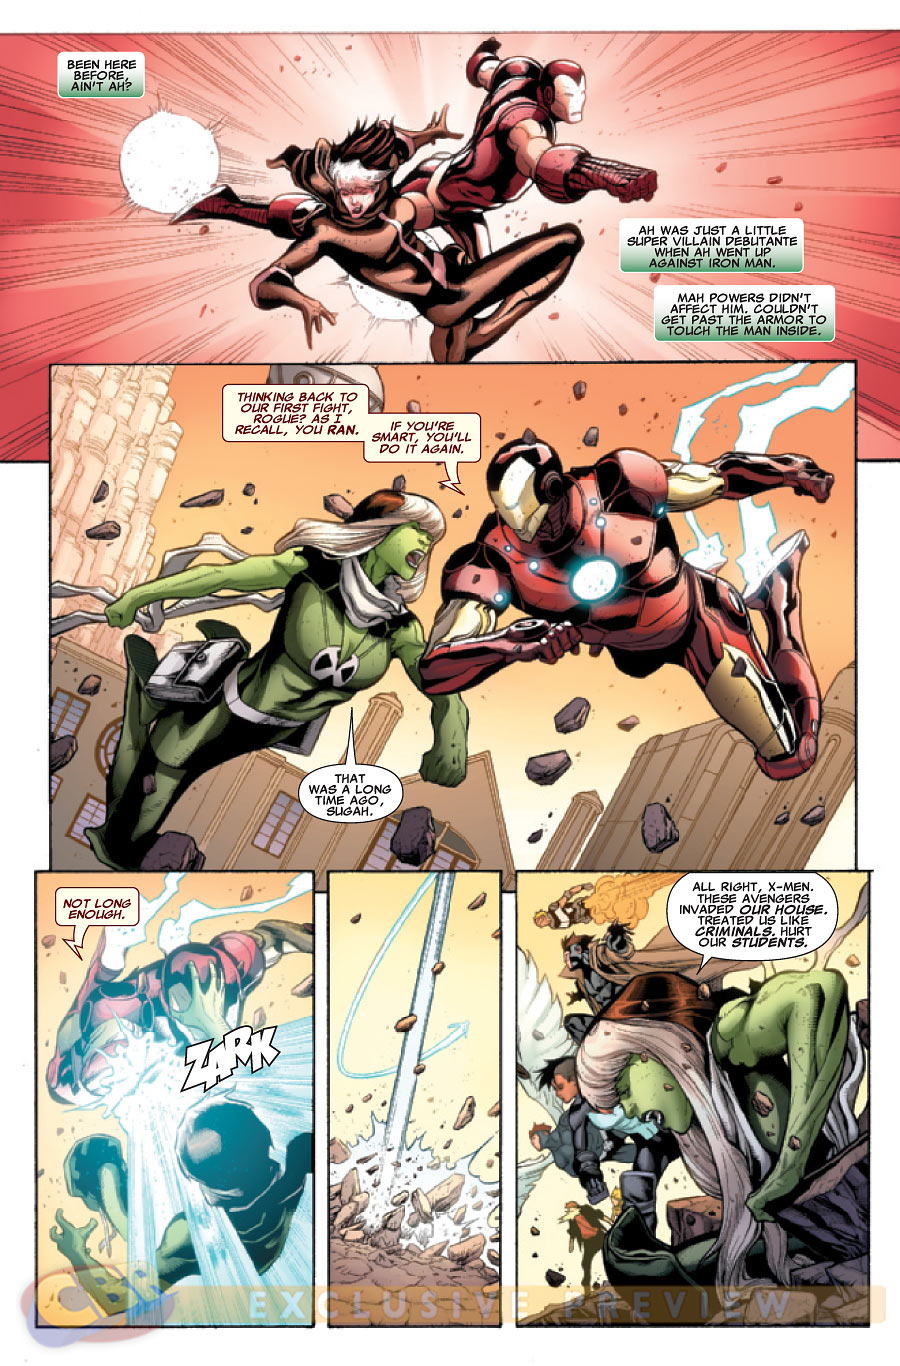 X-MEN LEGACY #267 - AvX - Marvel Comics - Blog Farofeiros